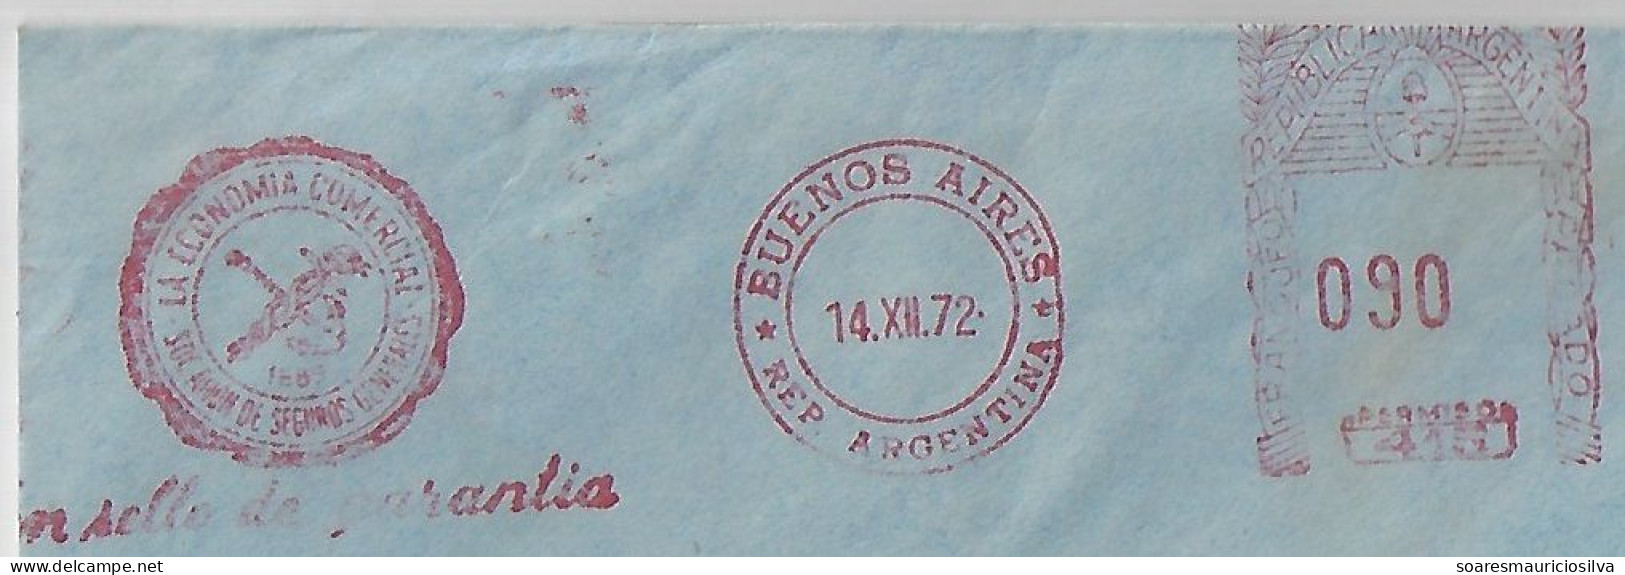 Argentina 1972 Cover Buenos Aires Obispo Trejo Meter Stamp Hasler Slogan Commercial Economy General Insurance Company - Storia Postale